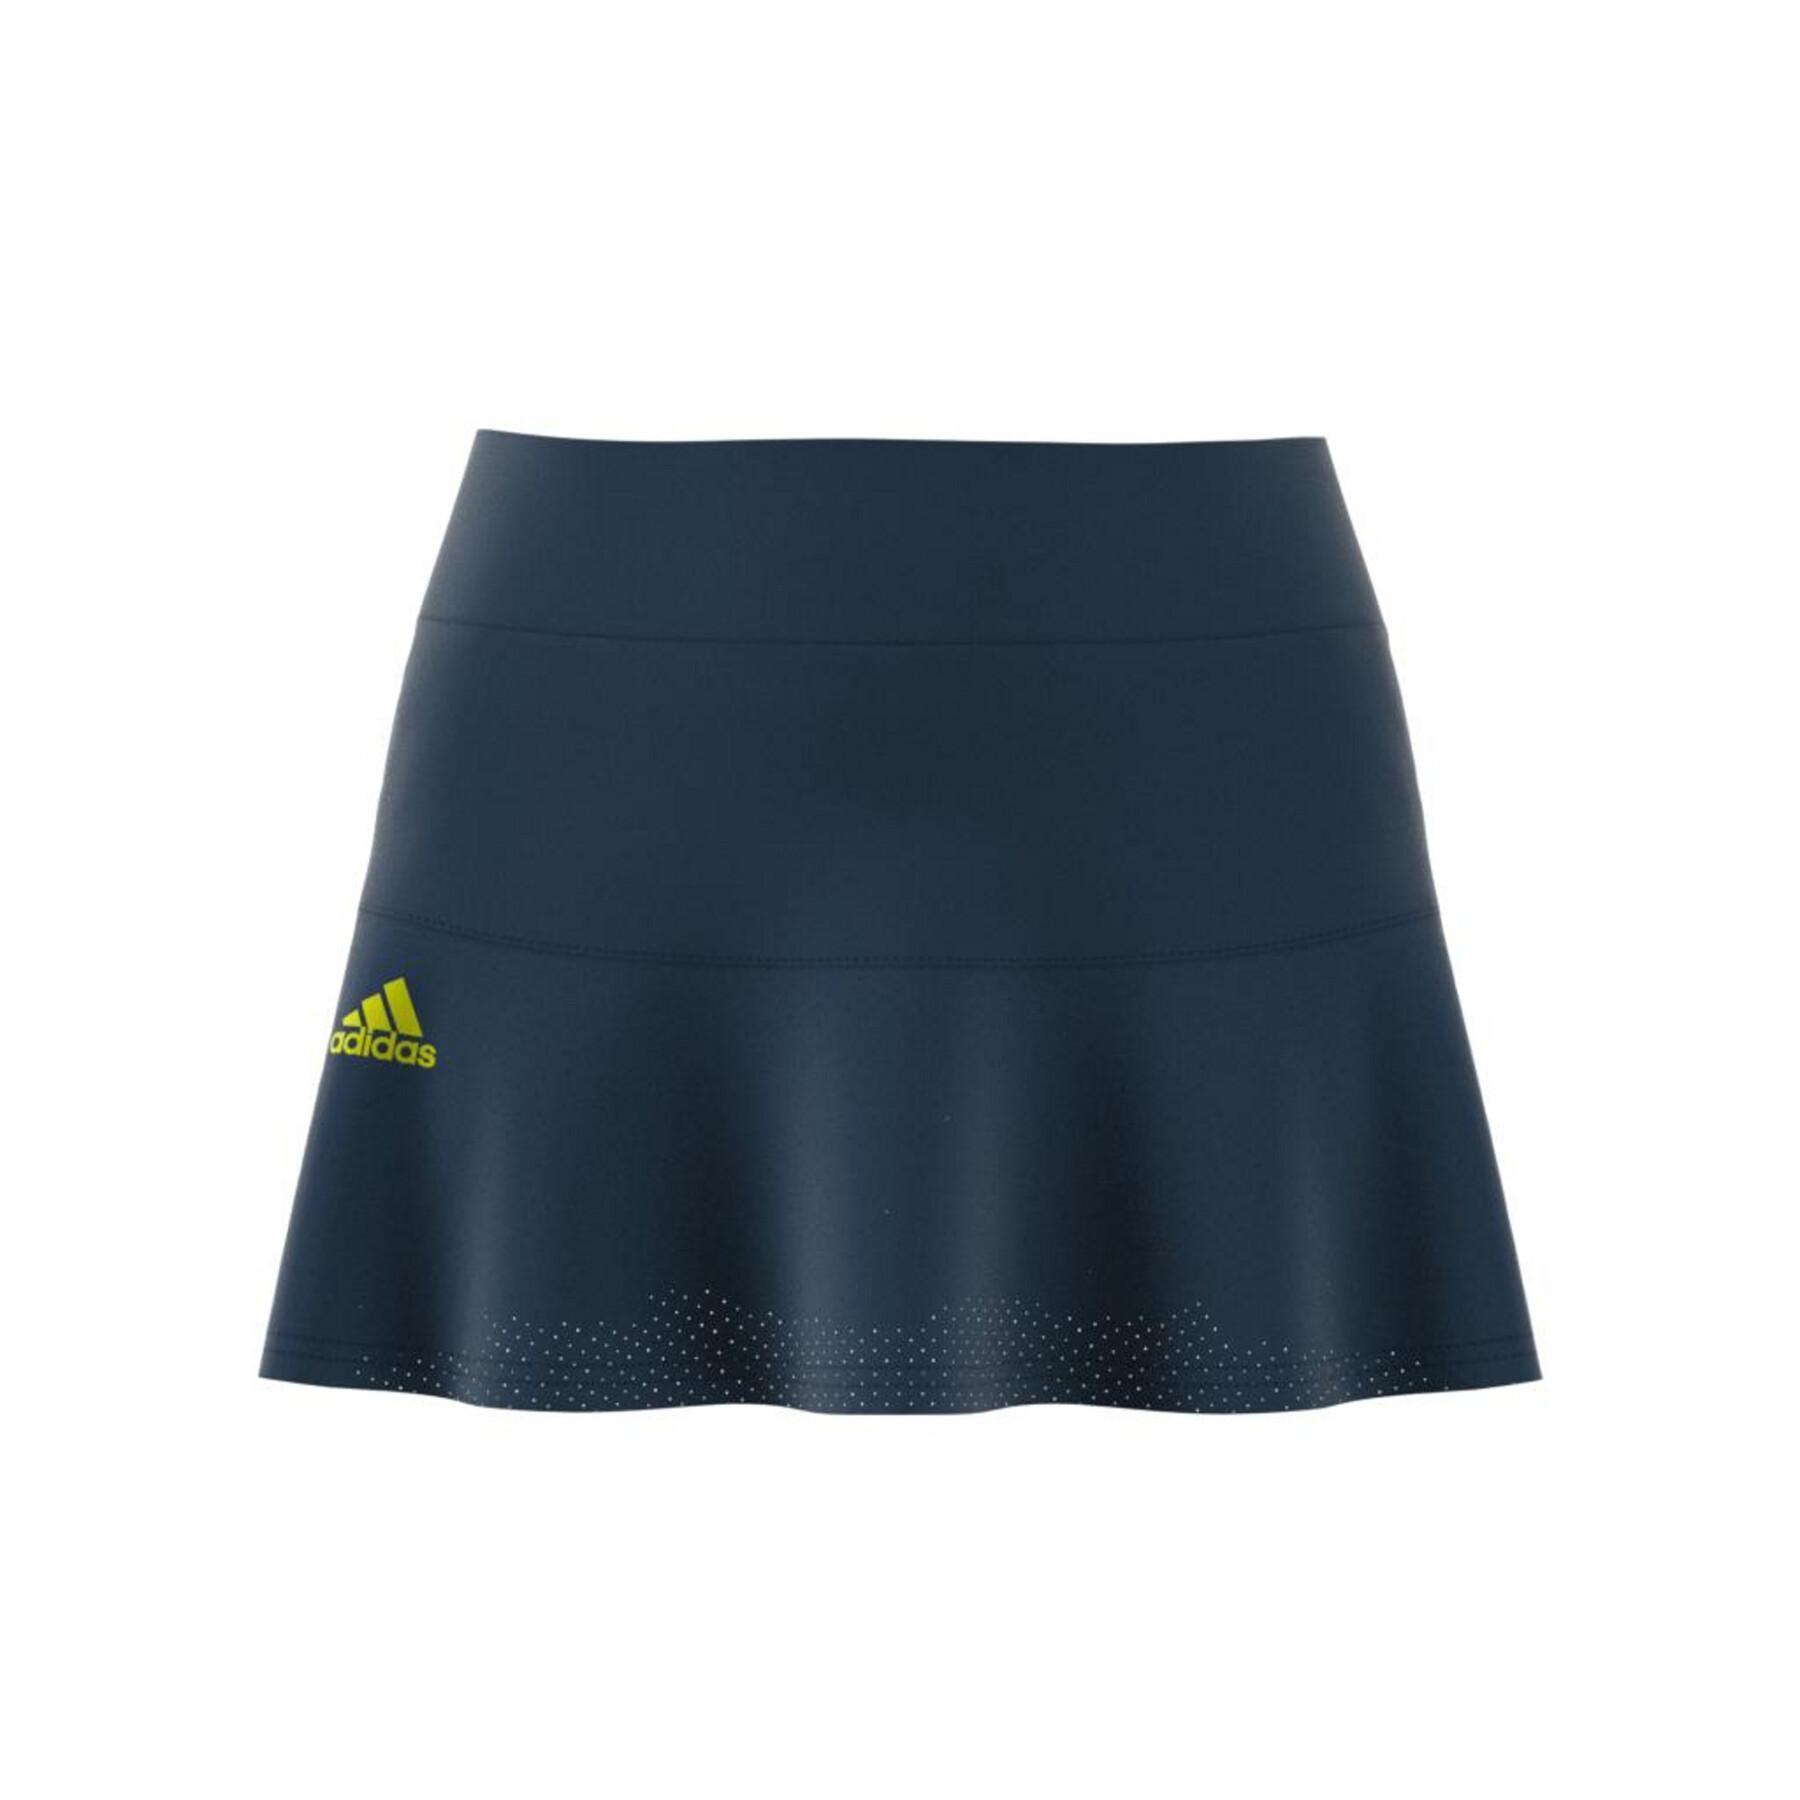 Jupe-short femme adidas Tennis Match Aeroready